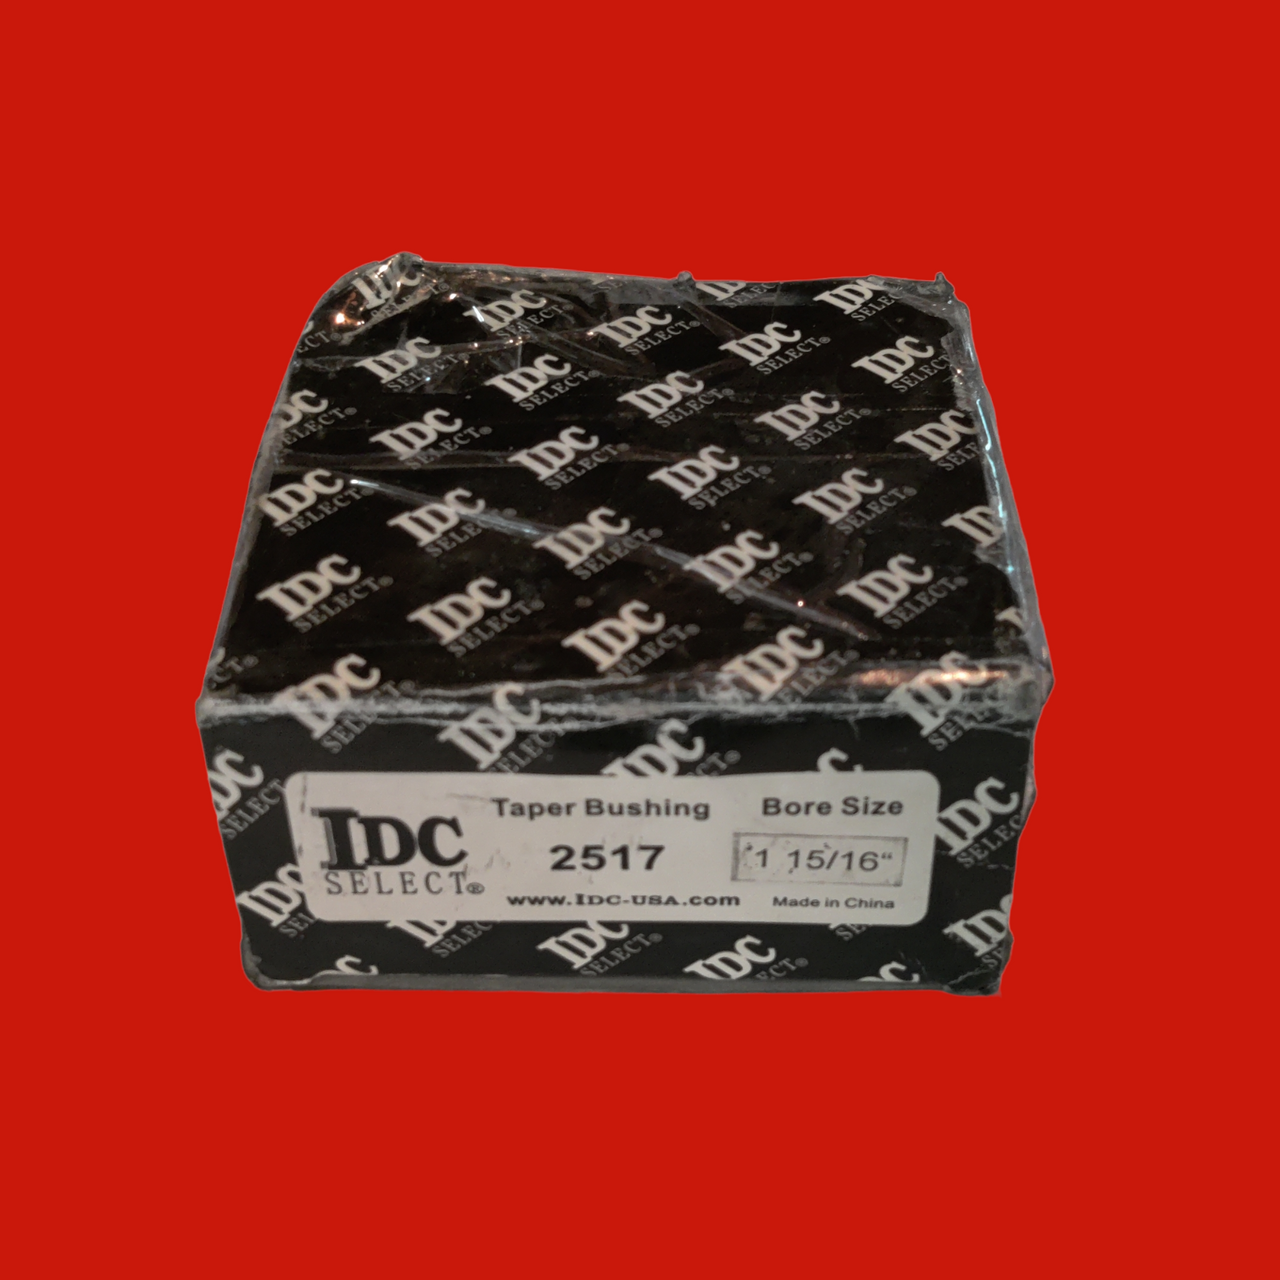 IDC Select Taper Bushing 2517, 1-15/16" Bore